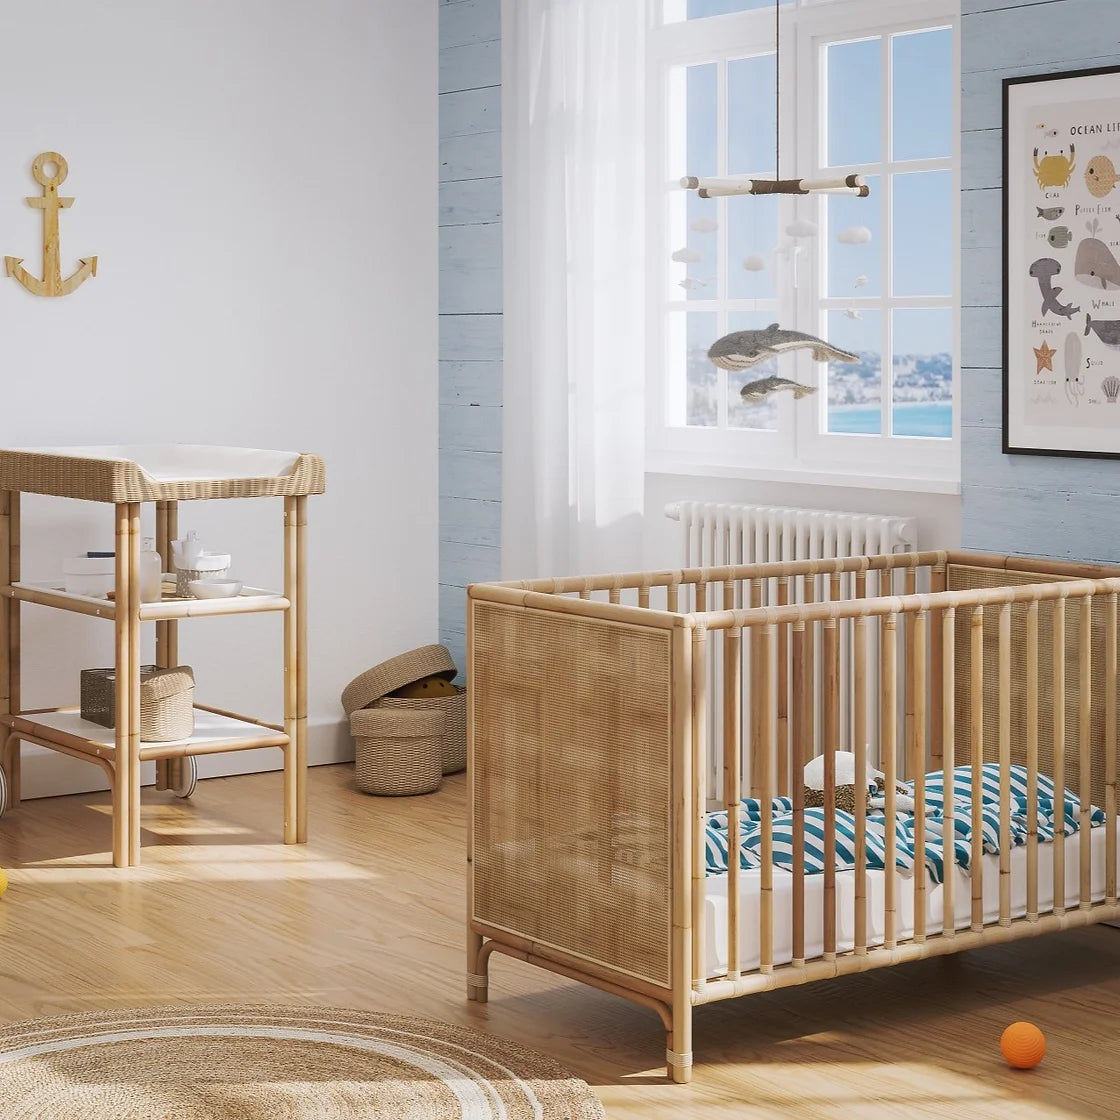 Chambre naissance Rotin Némo Théo Bébé - Baby & Toddler Furniture Sets par Théo Bébé